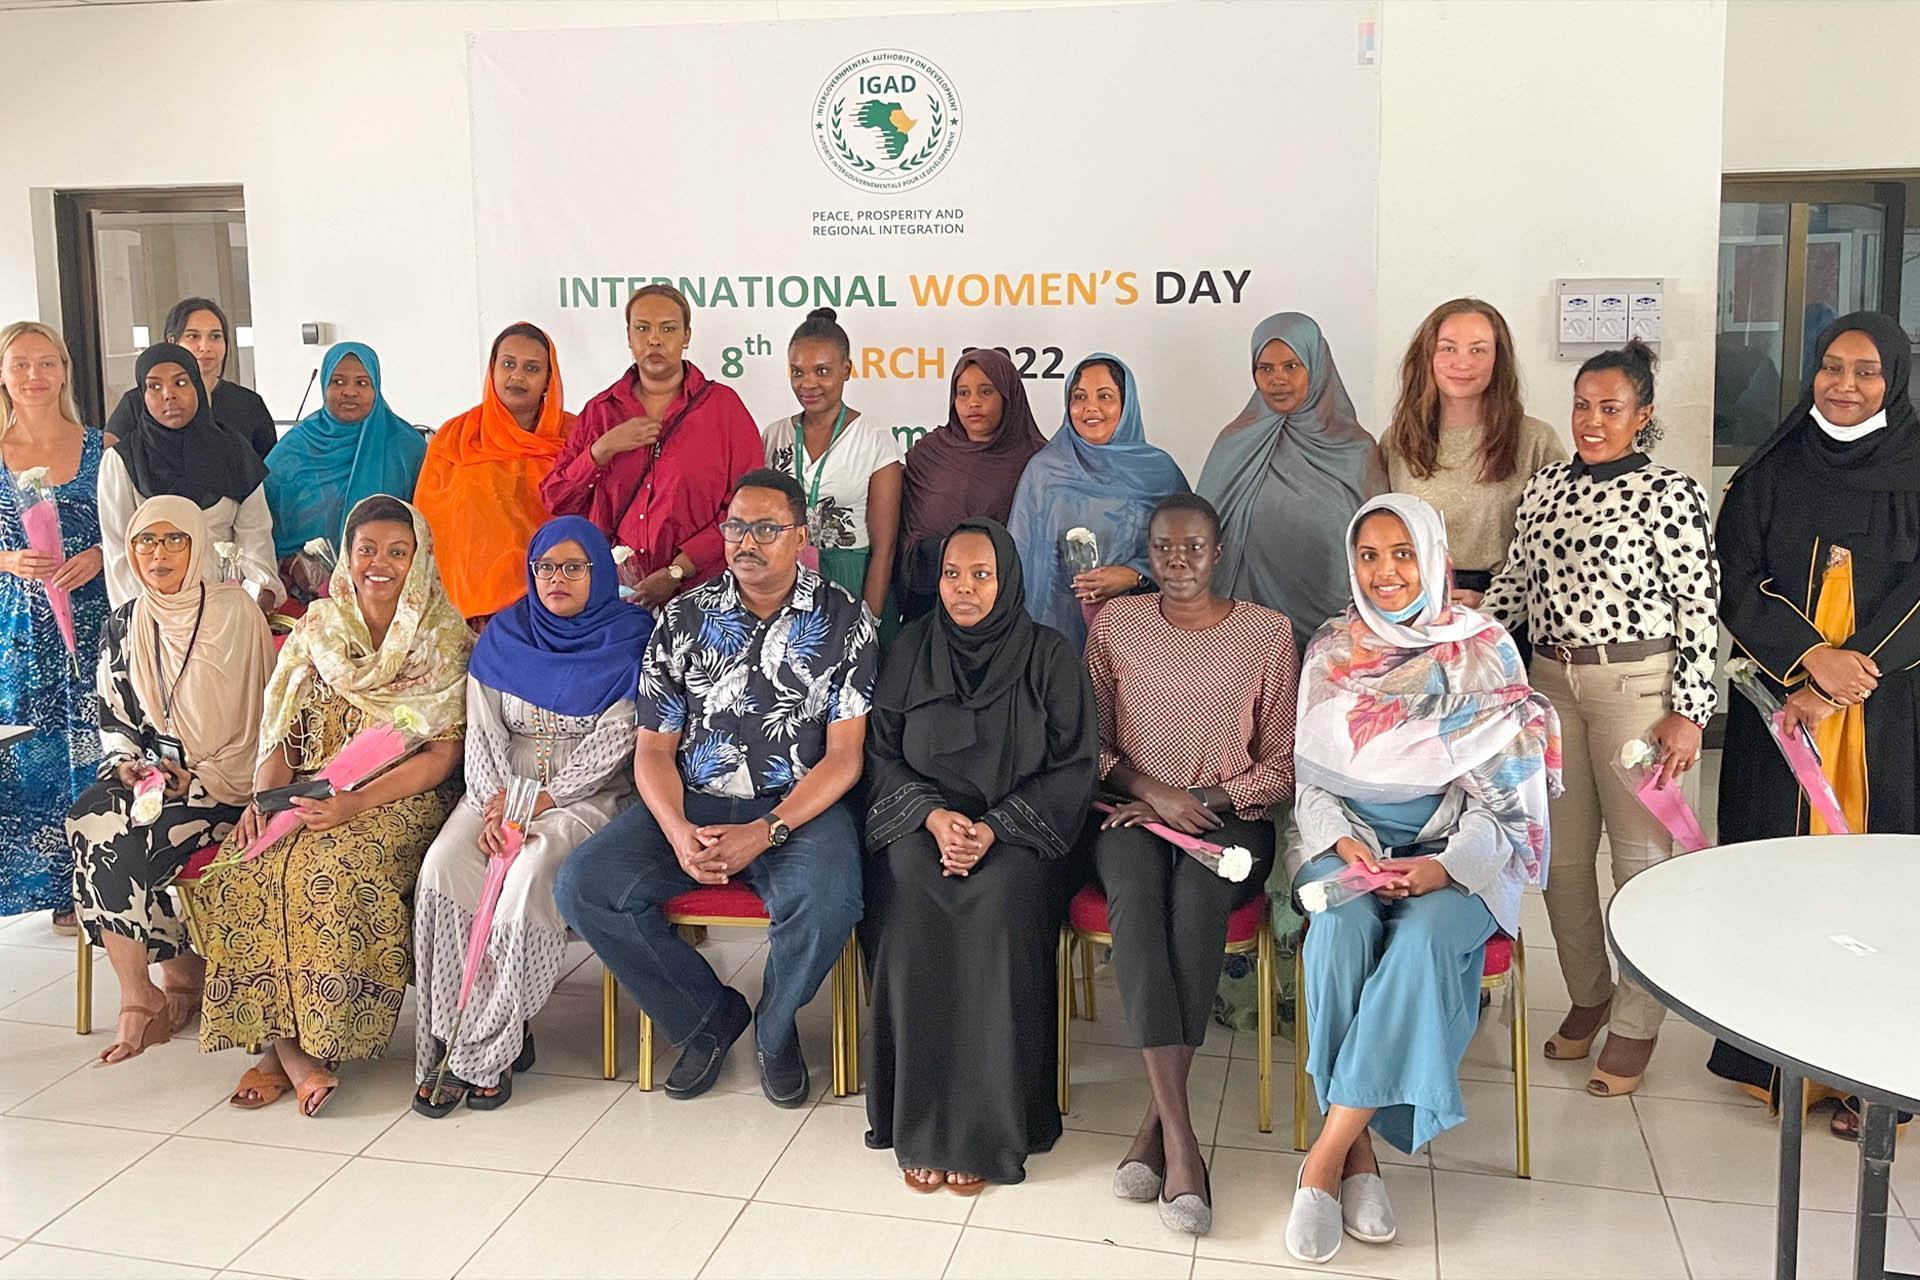 IGAD Celebrates International Women’s Day 2022